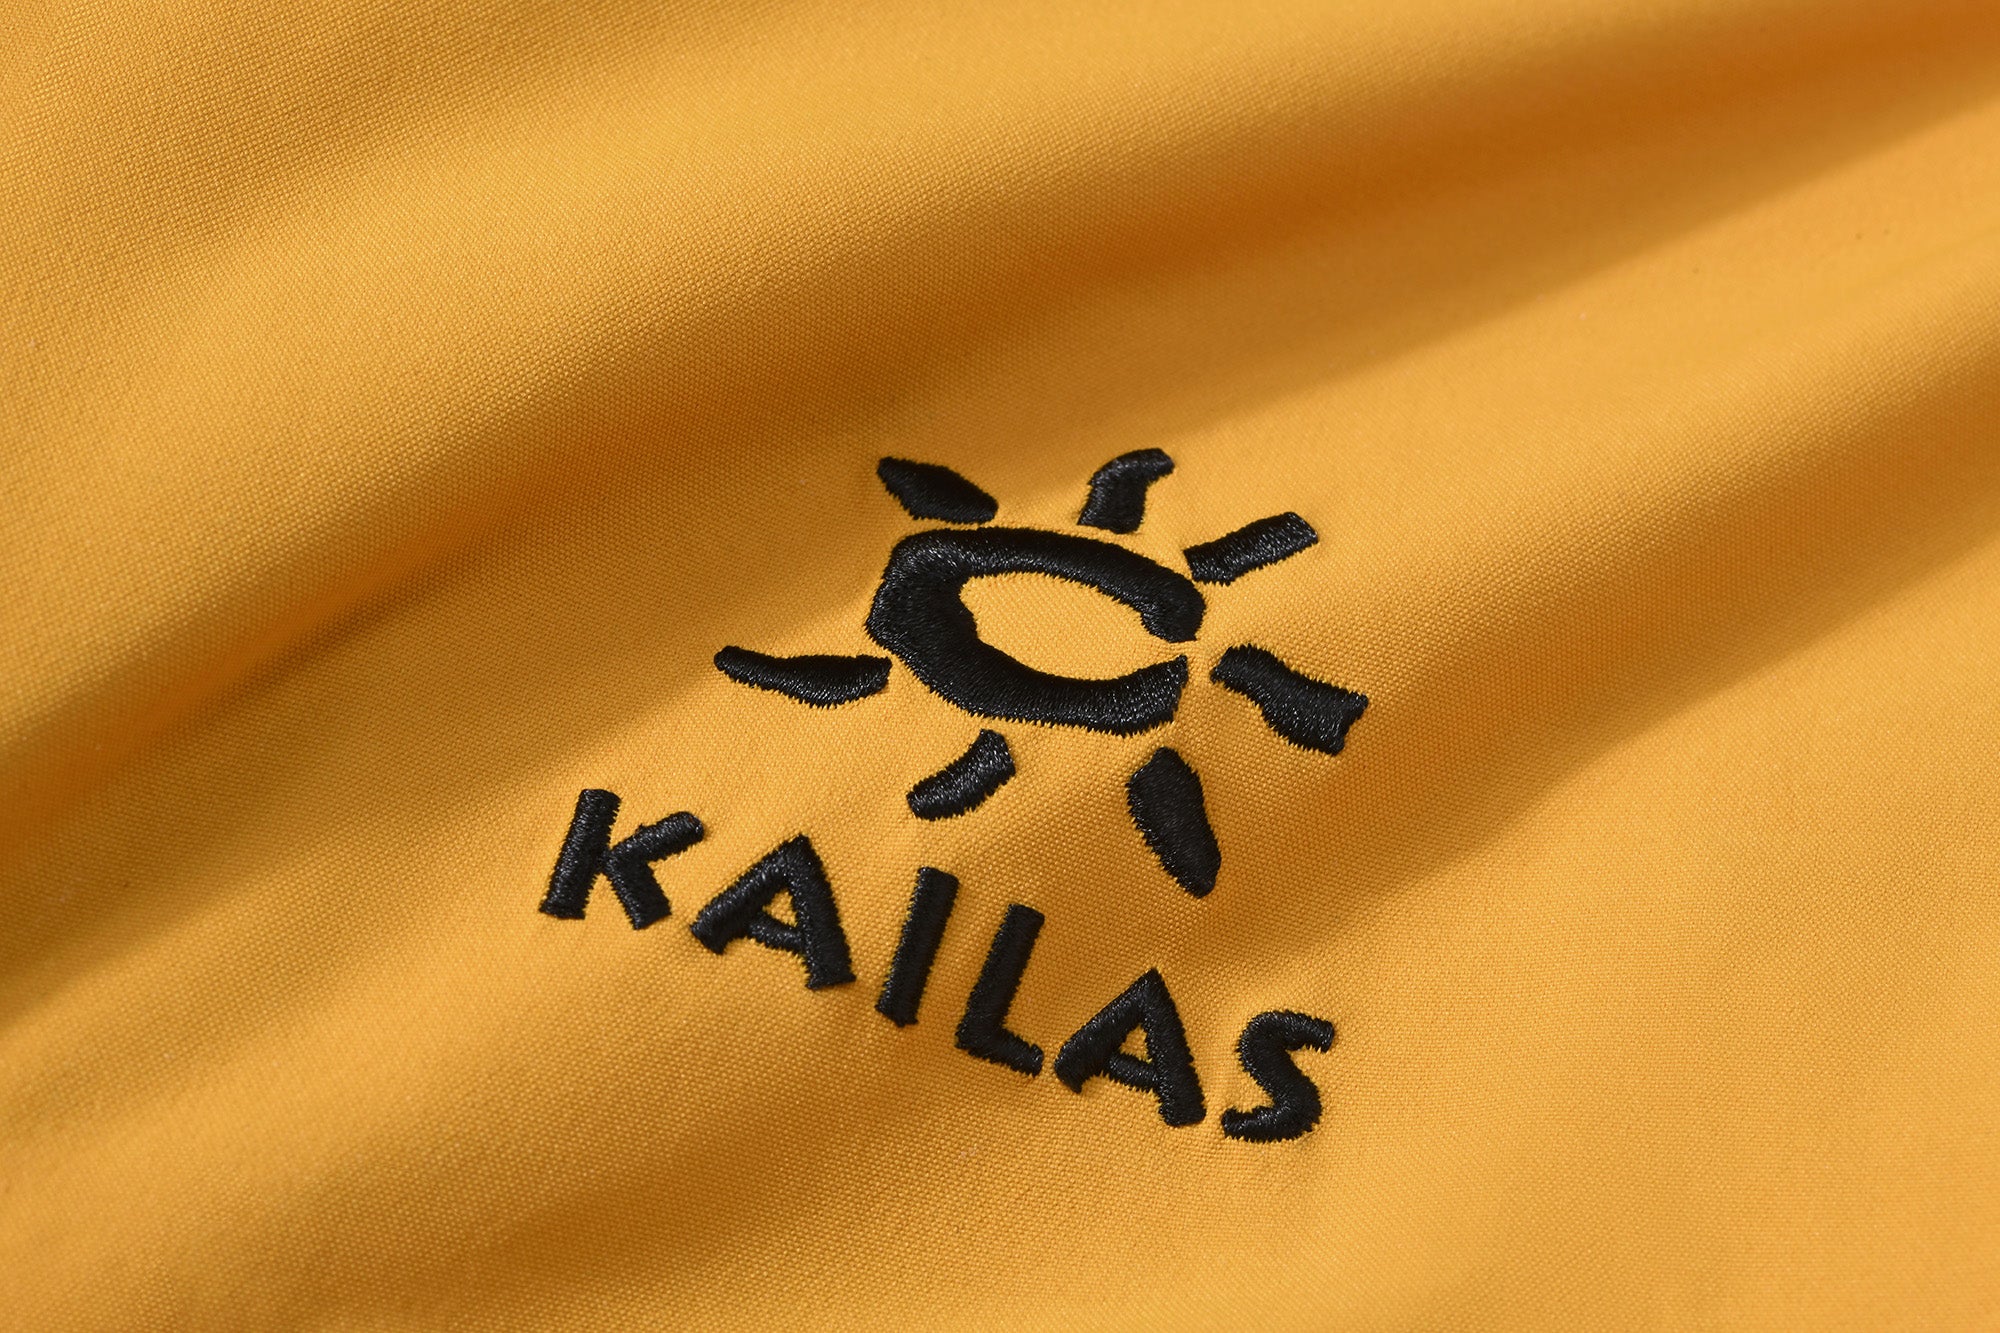 Kailas MONT Plus GORE-TEX PrimaLoft Waterproof Hardshell Jacket for 5000 to 6000m peaks